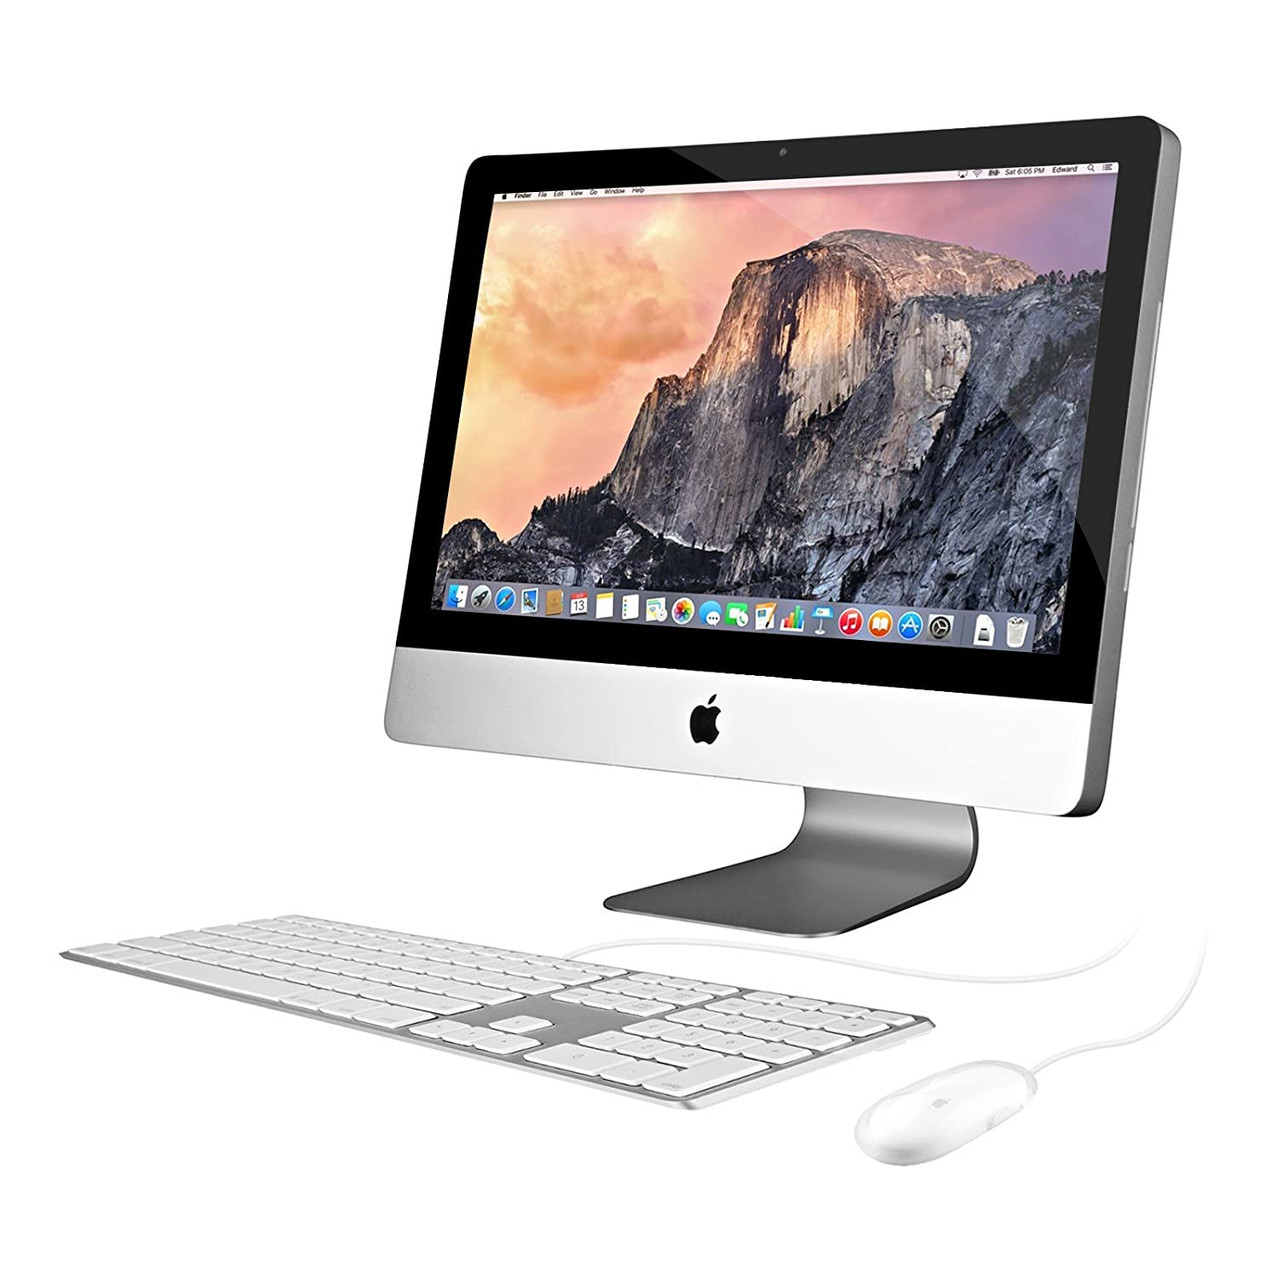 iMac with Intel Core i3 3.1GHz, 4GB RAM, HDD - UntilGone.com